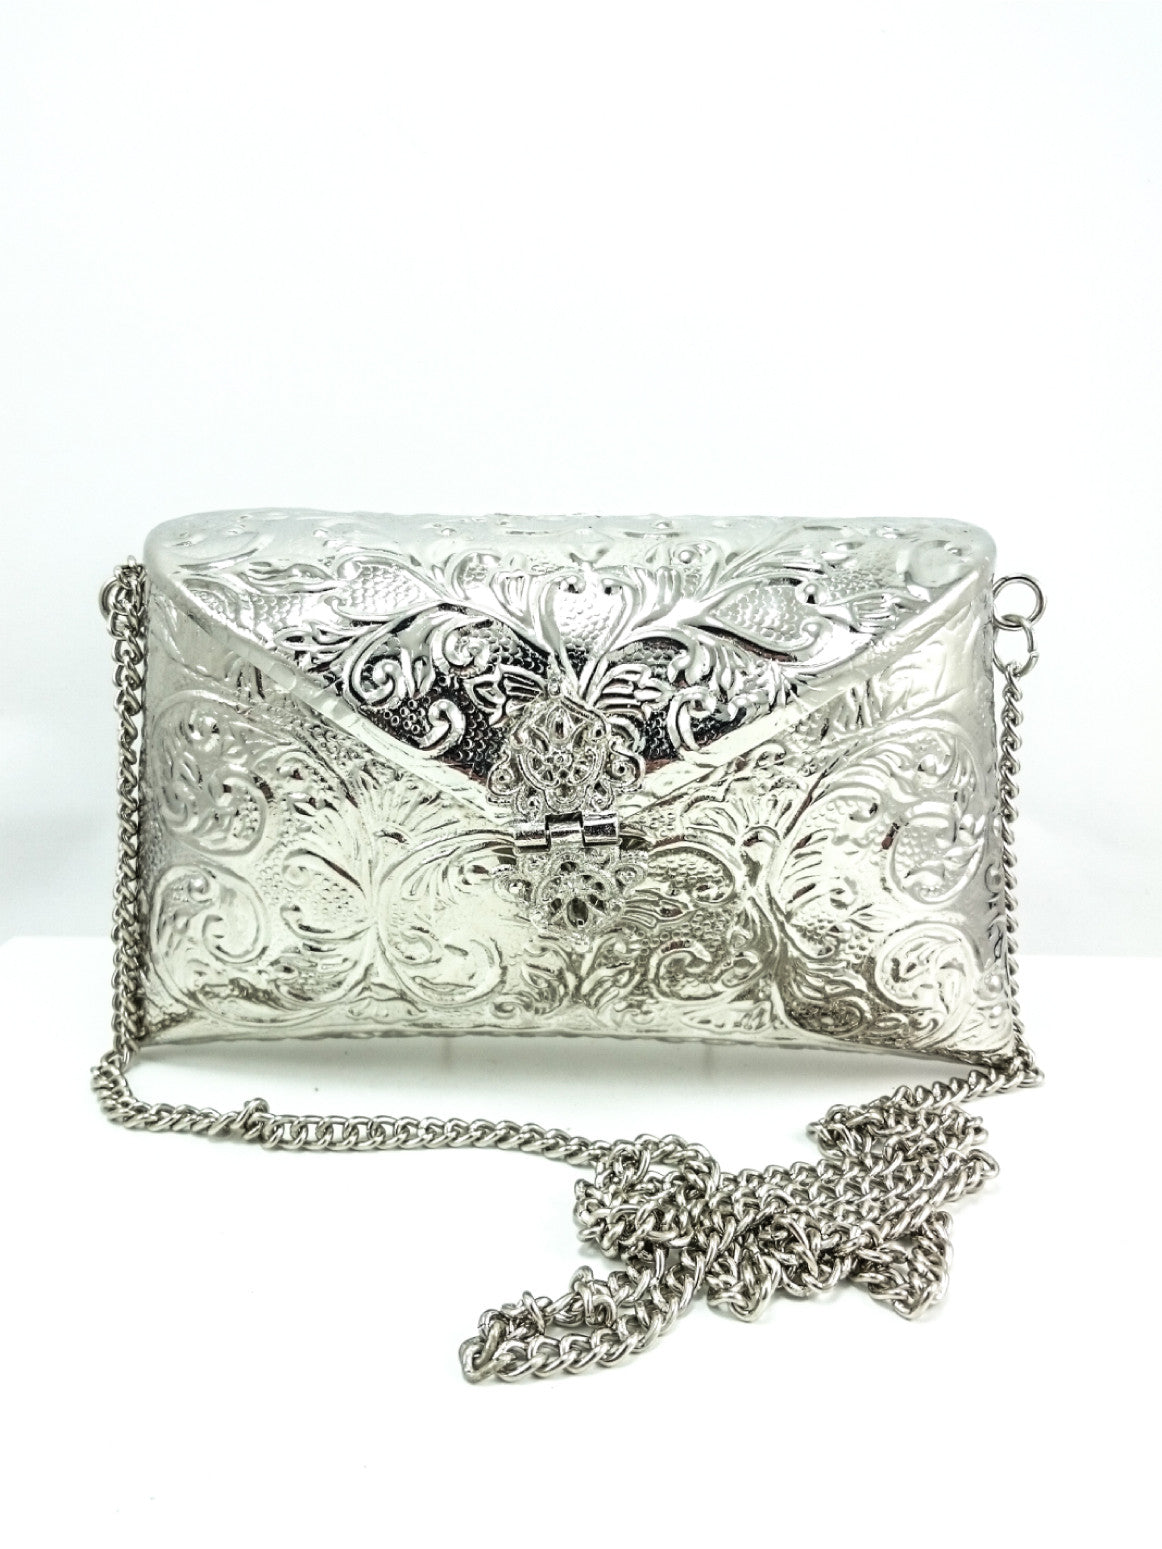 PH Artistic Purse 925 Sterling Silver Bag Clutch Handbag Onyx Zircon Stone  Women Gift E698 : Amazon.in: Fashion